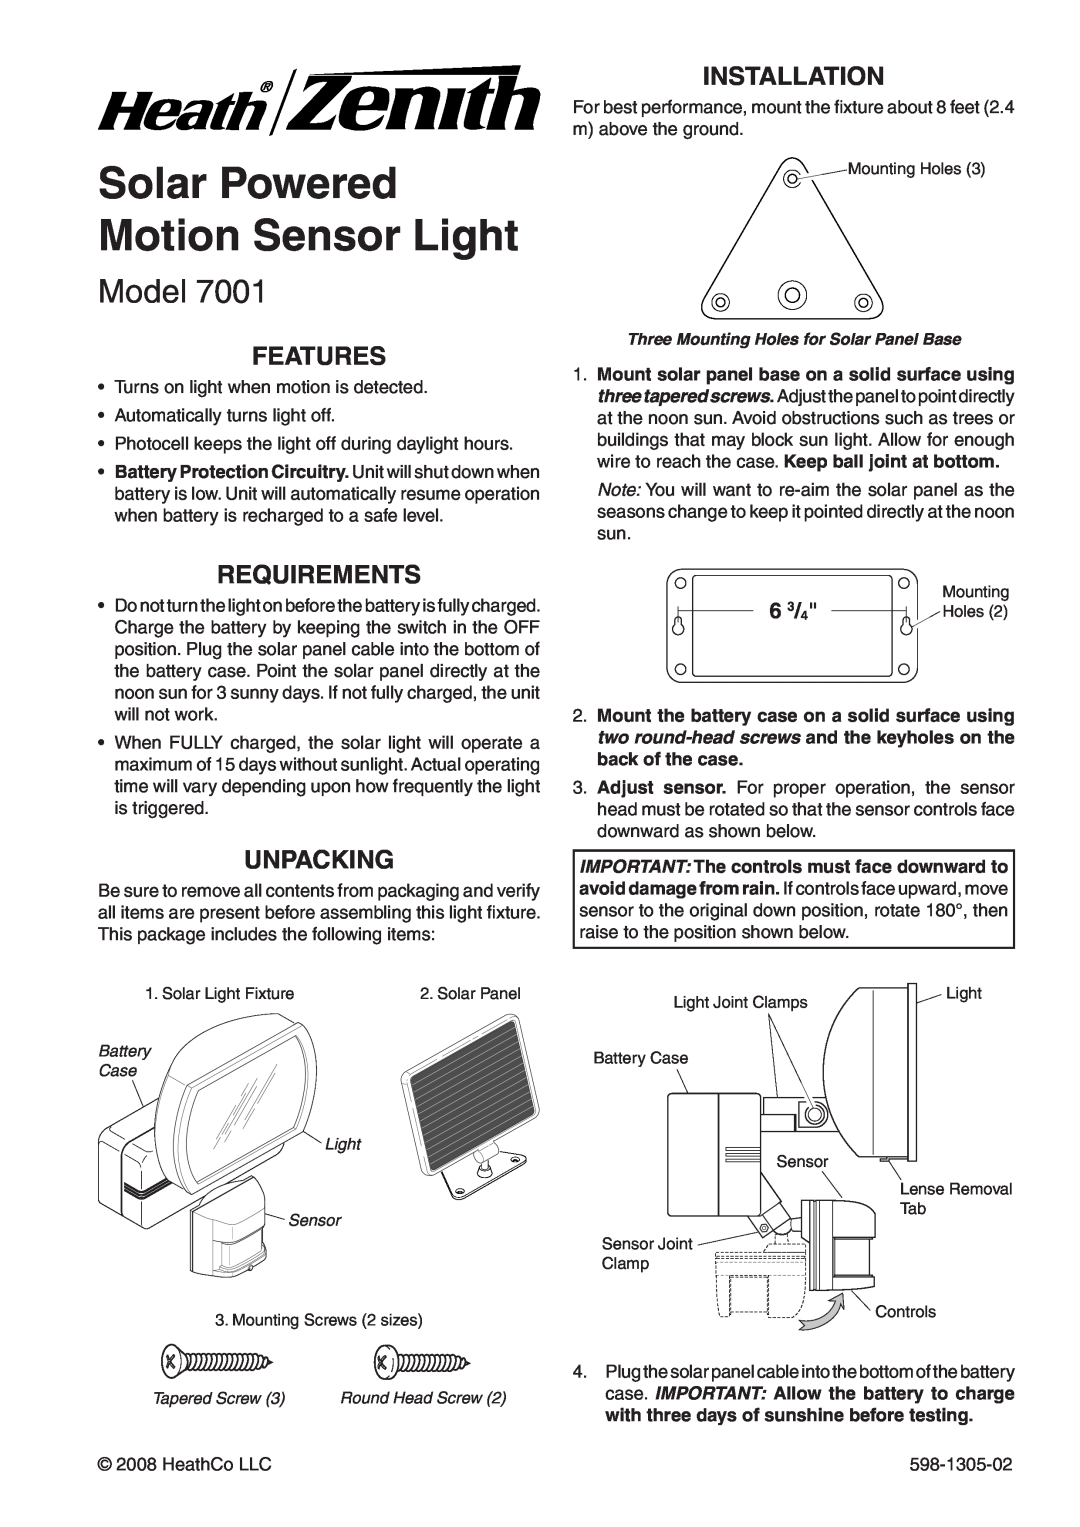 Heath Zenith 7001 manual Solar Powered Motion Sensor Light, Model, Features, Requirements, Unpacking, Installation, 6 3/4 